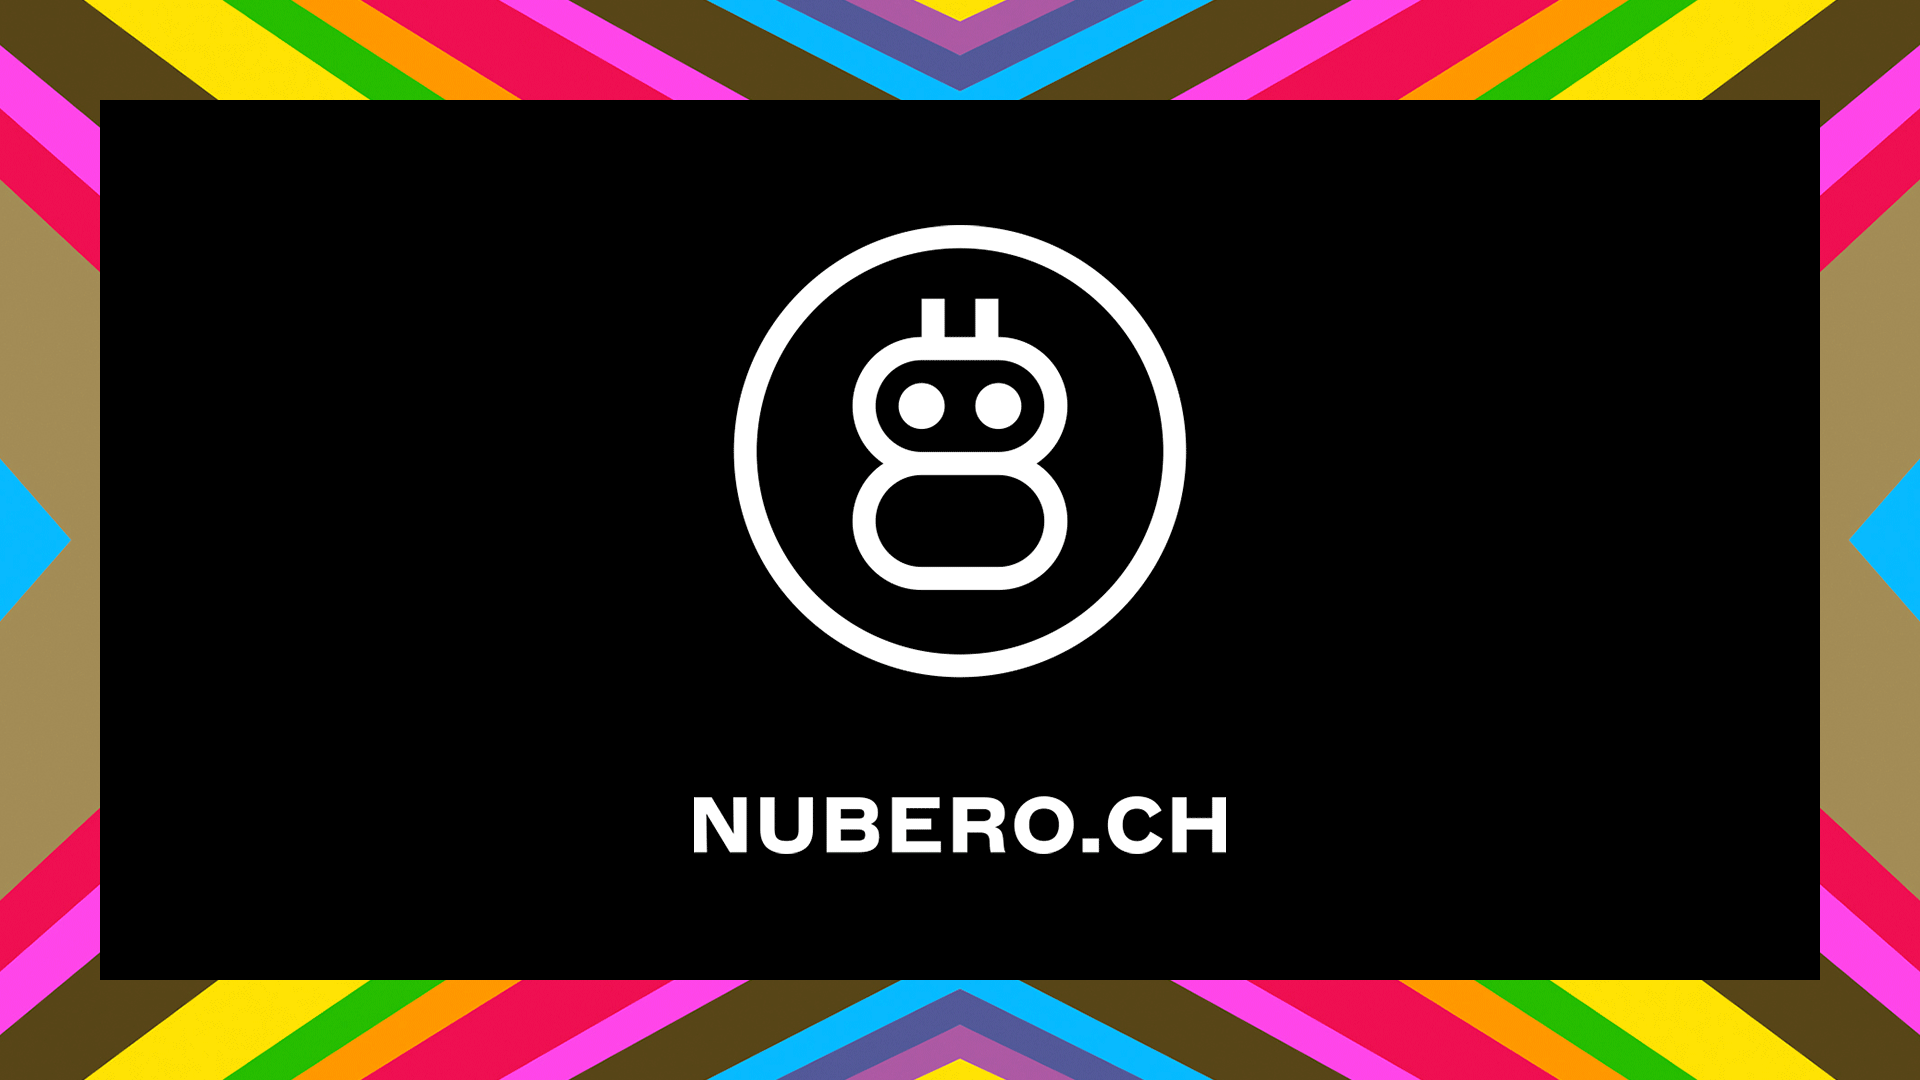 www.nubero.ch image